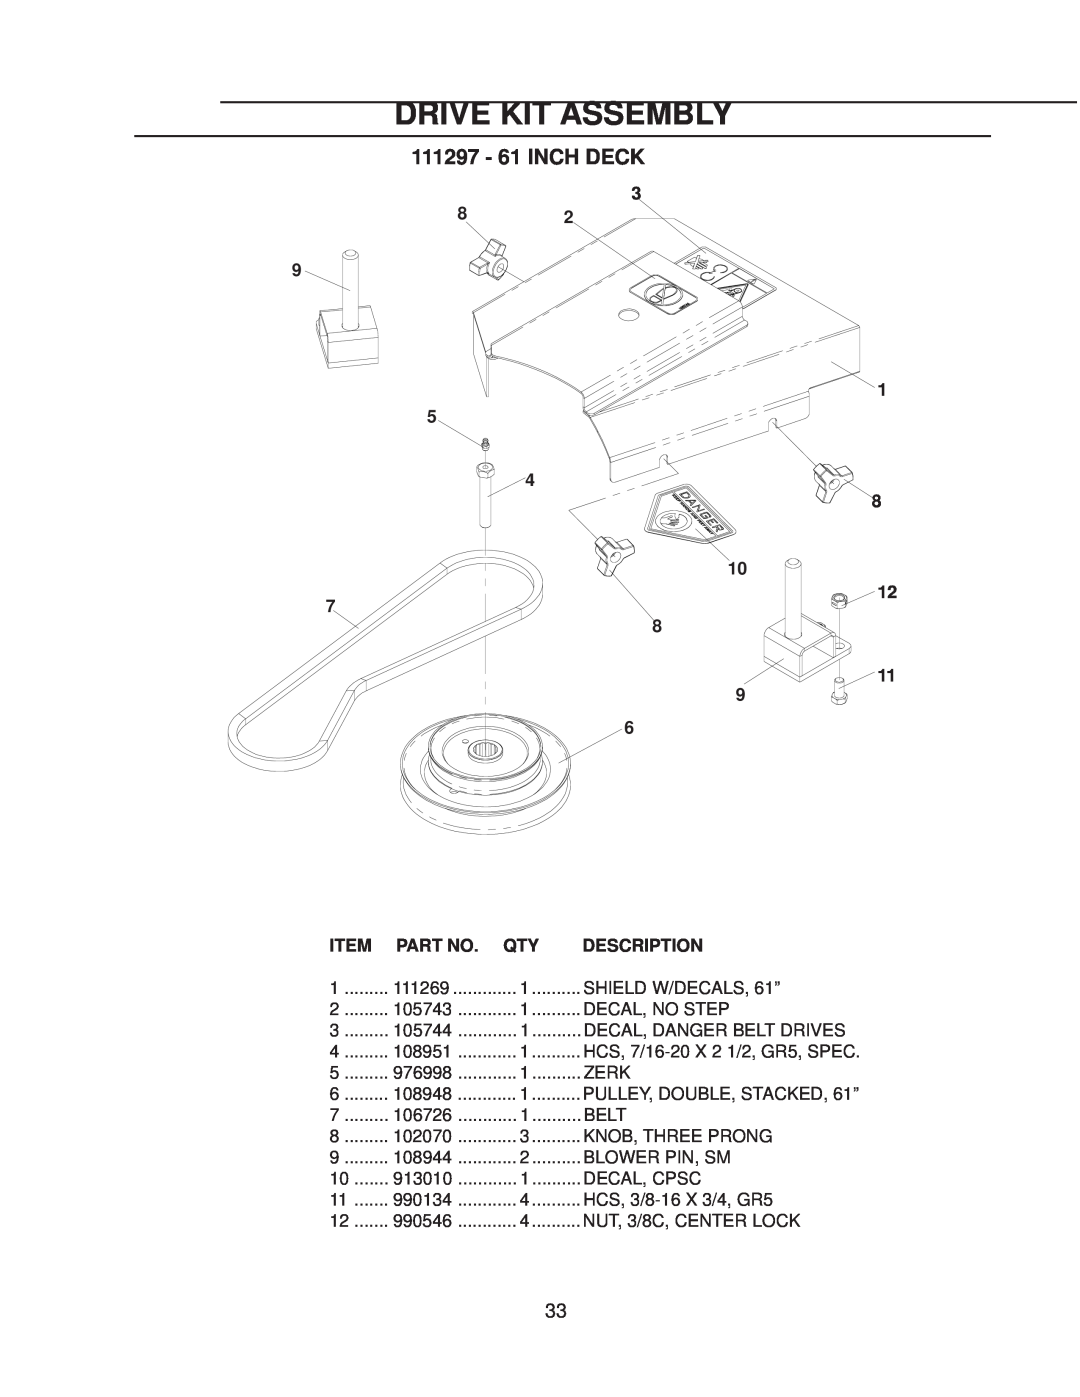 Yazoo/Kees CS13, CS9 manual 111297 - 61 INCH DECK, Drive Kit Assembly, Description 